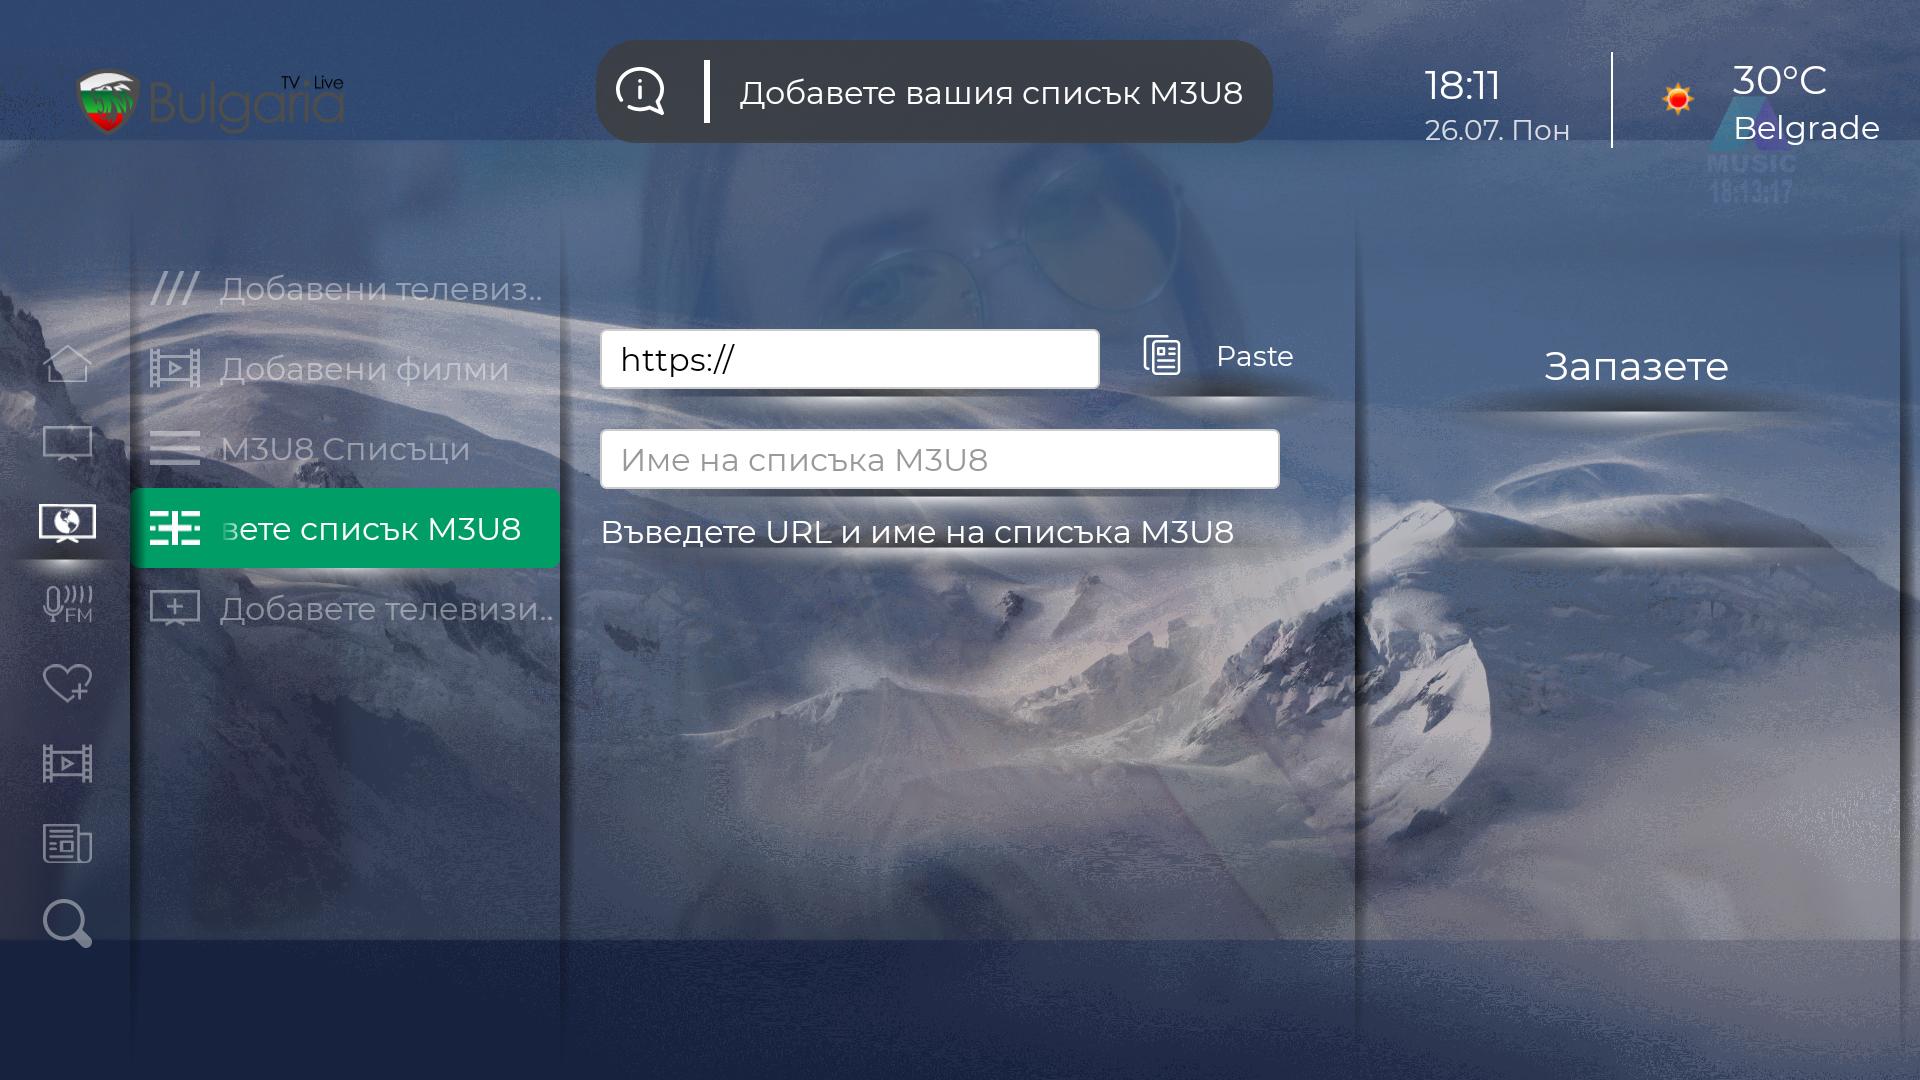 Bulgaria Live 1.2.04 Screenshot 13